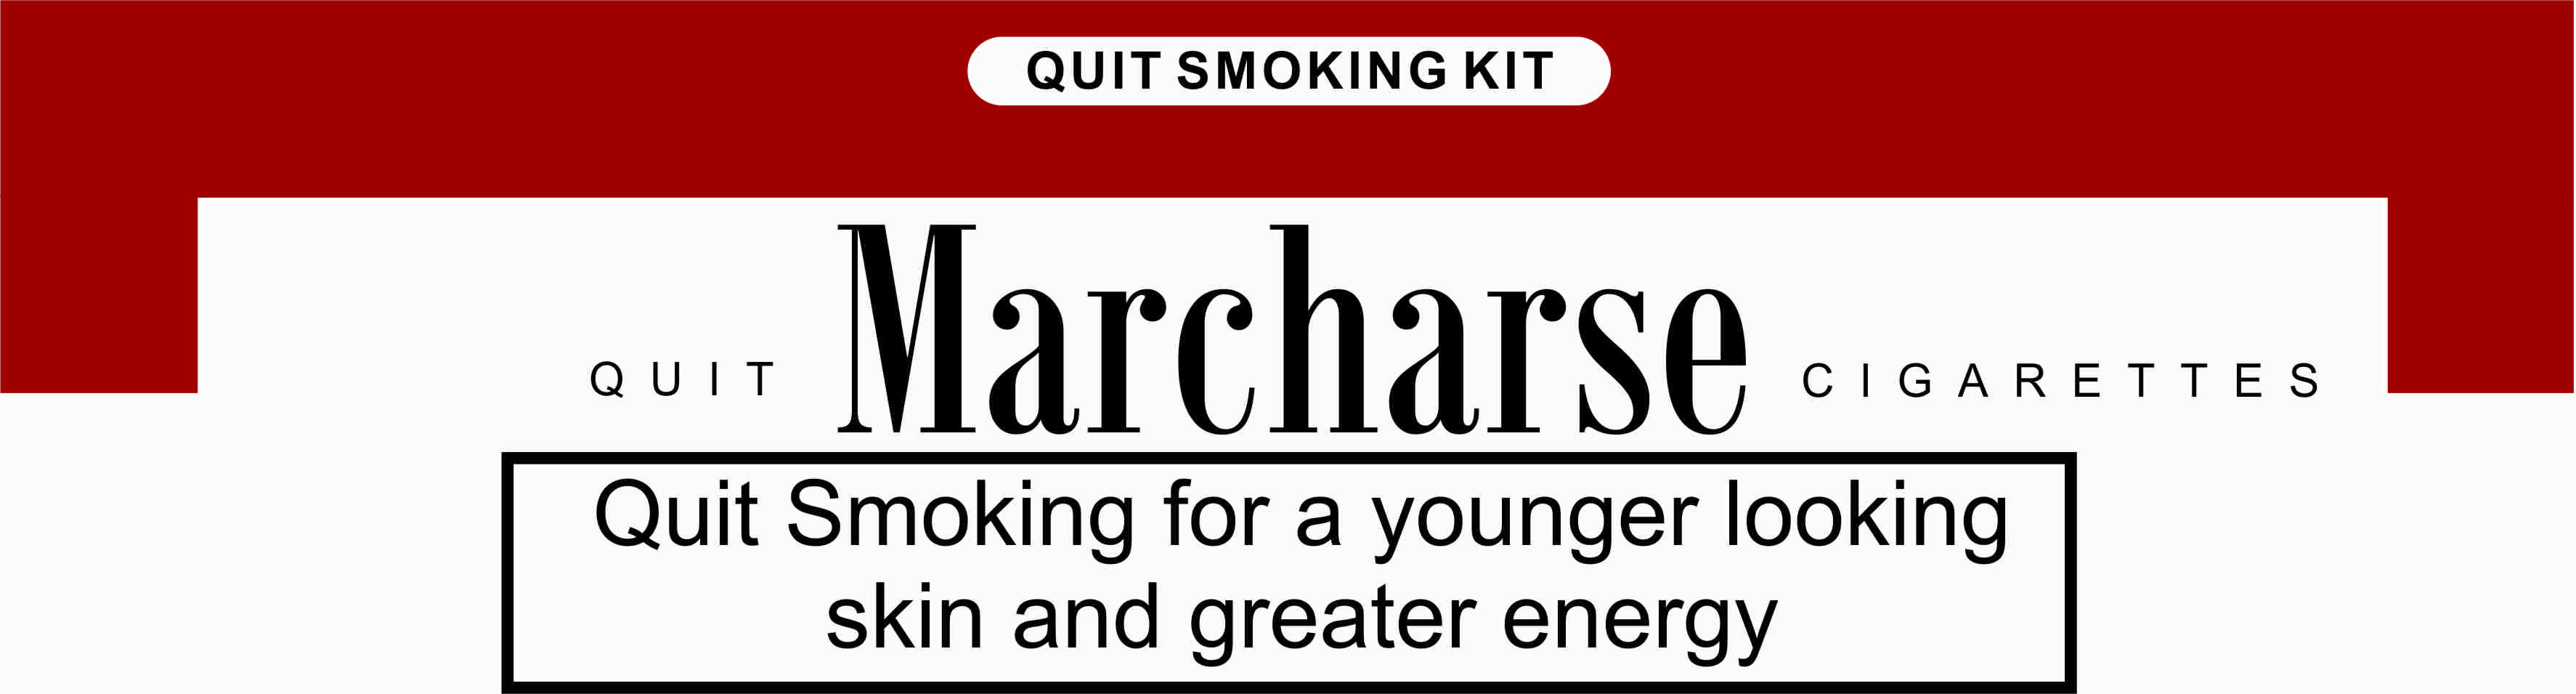 Marcharse Quit Smoking Kit